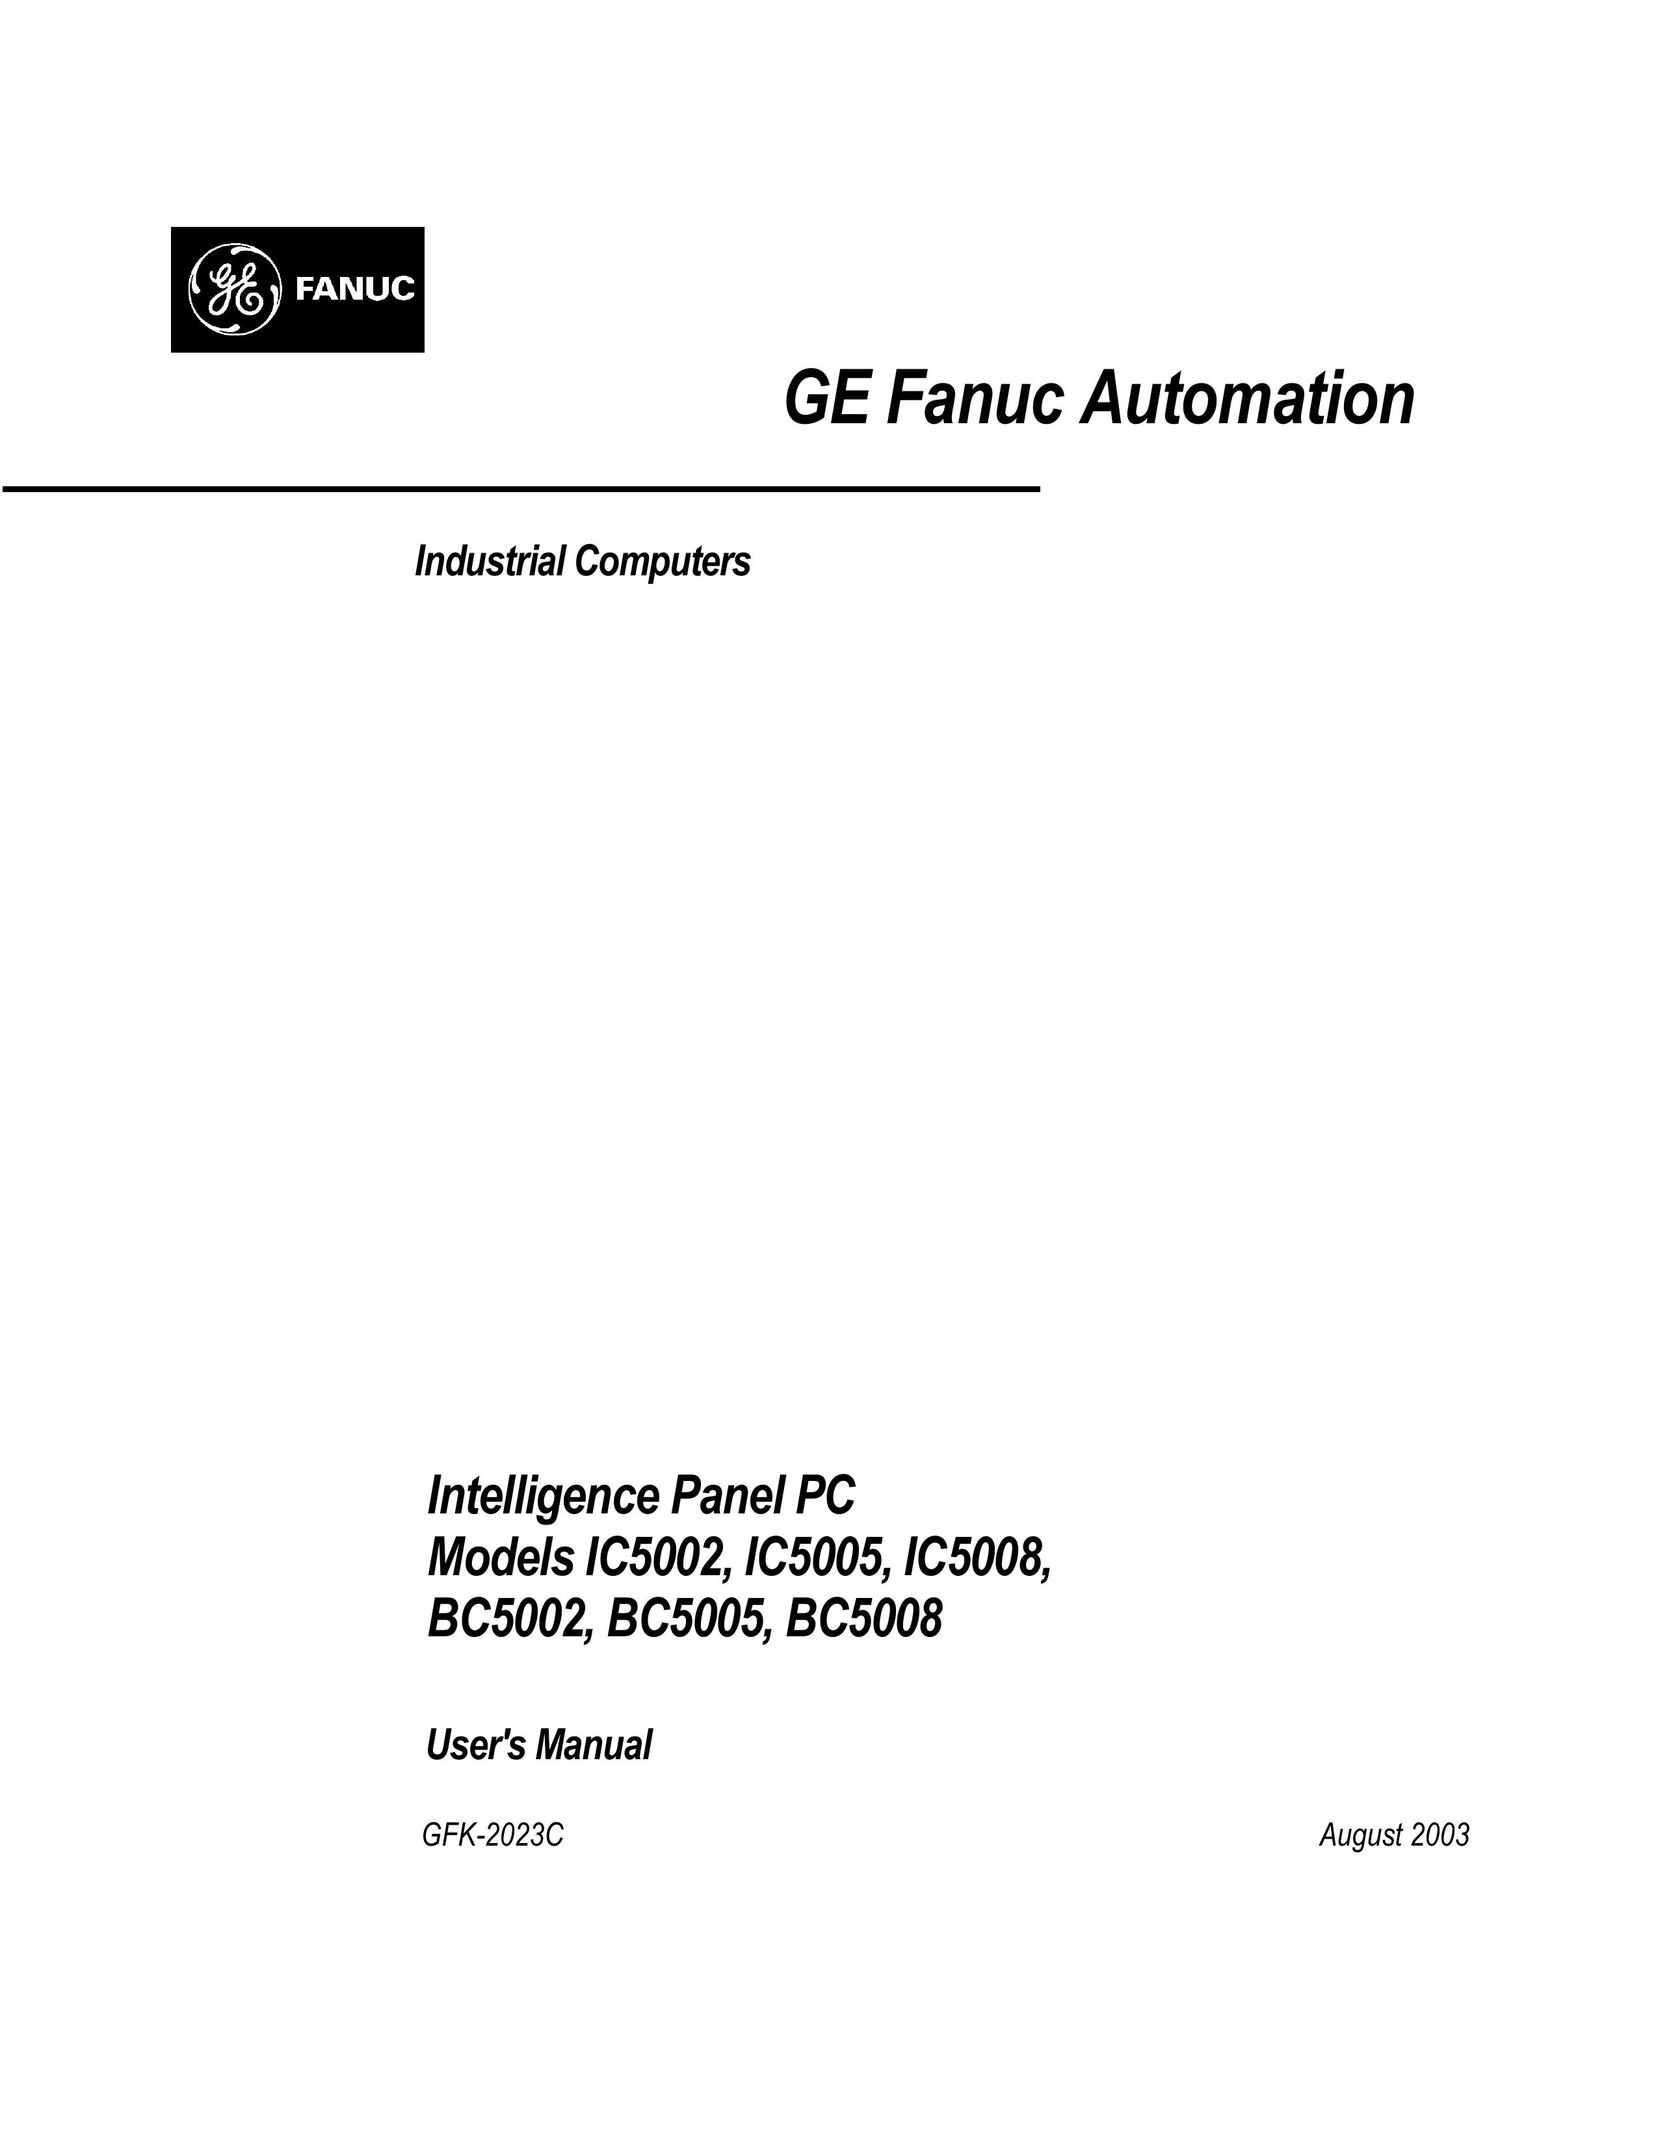 GE IC5002 Personal Computer User Manual